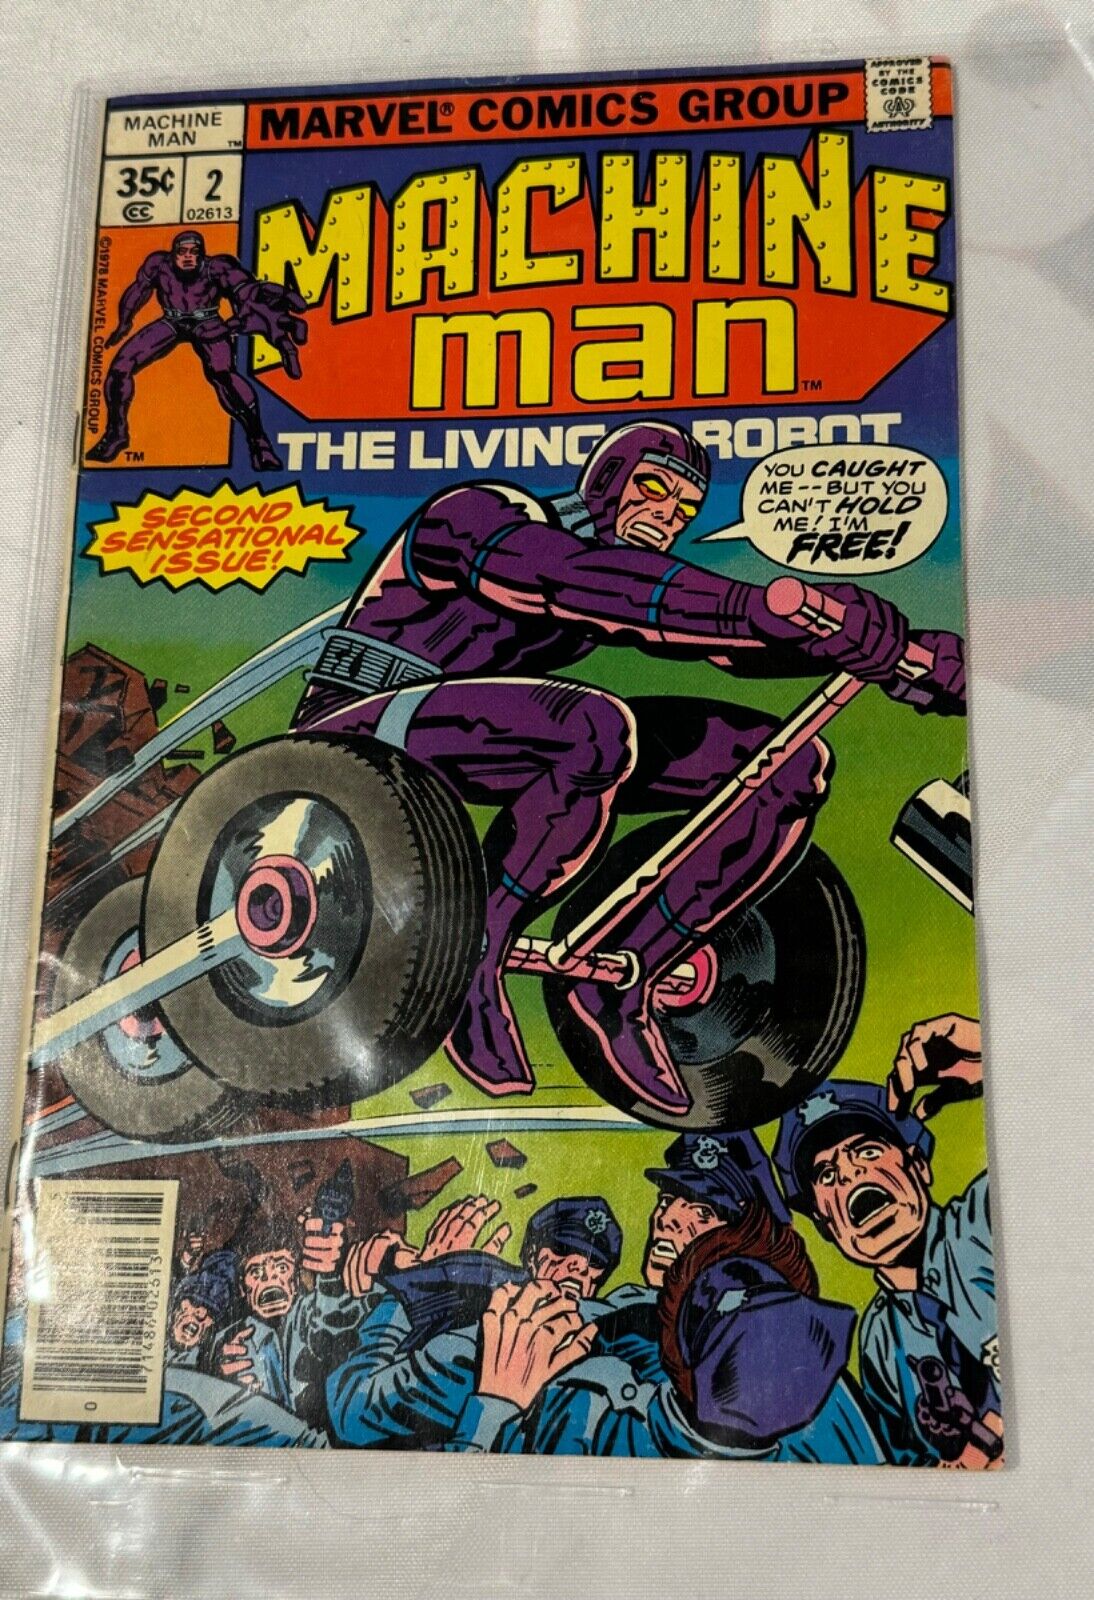 Machine Man #2 (Marvel Comics May 1978)